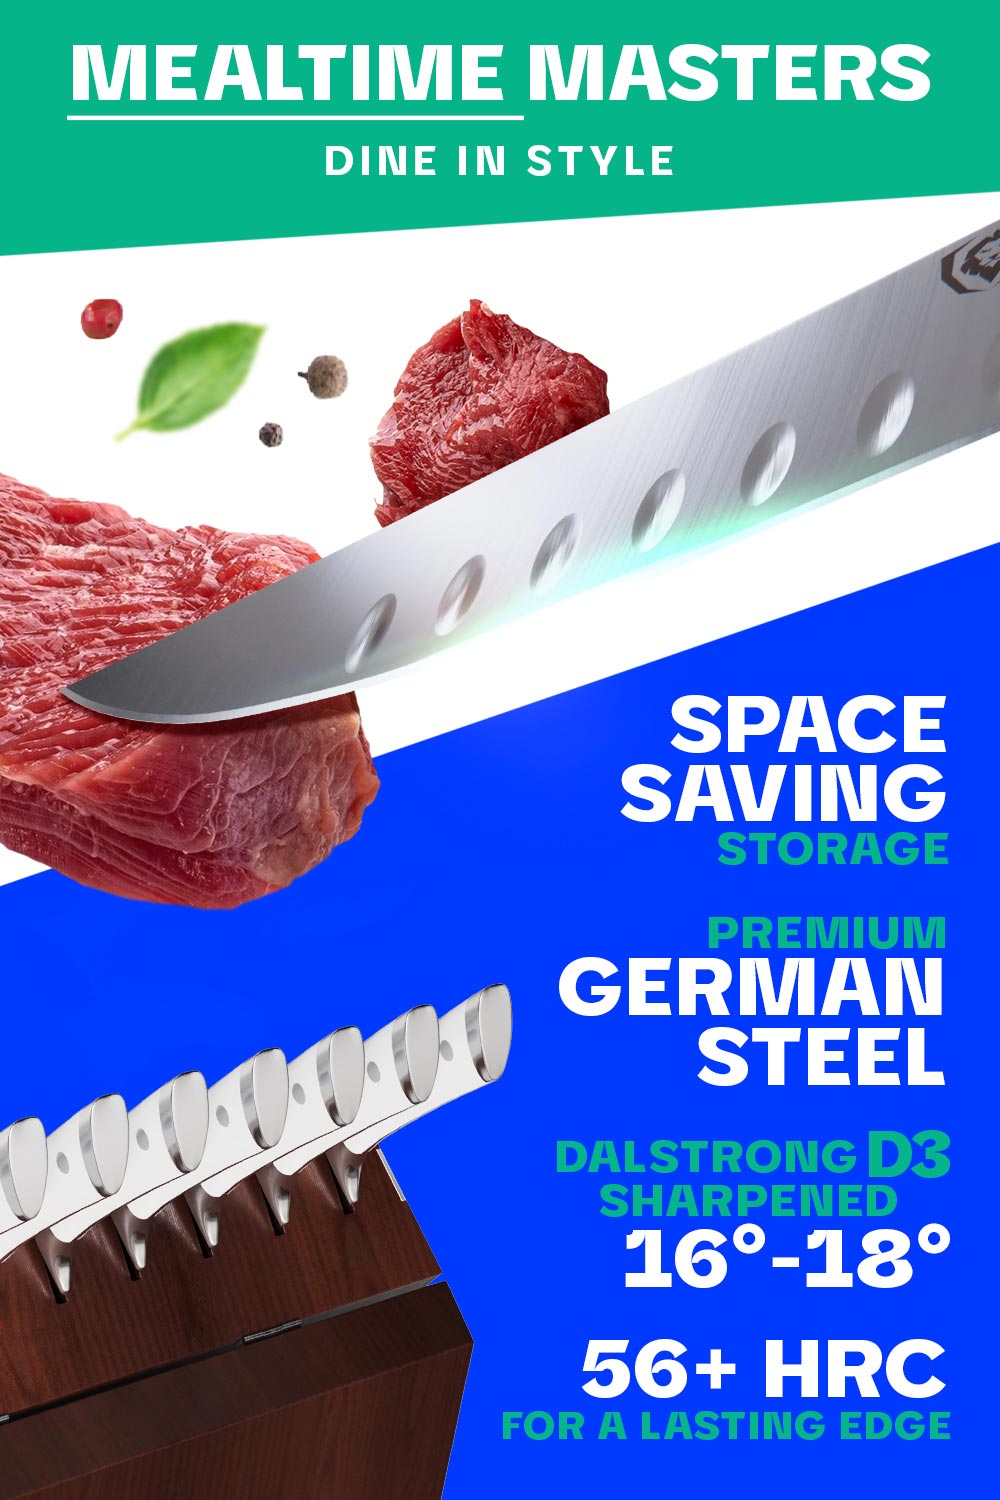 Dalstrong gladiator series 8 piece steak knife set with white handles featuring it's razor sharp german steel blade.